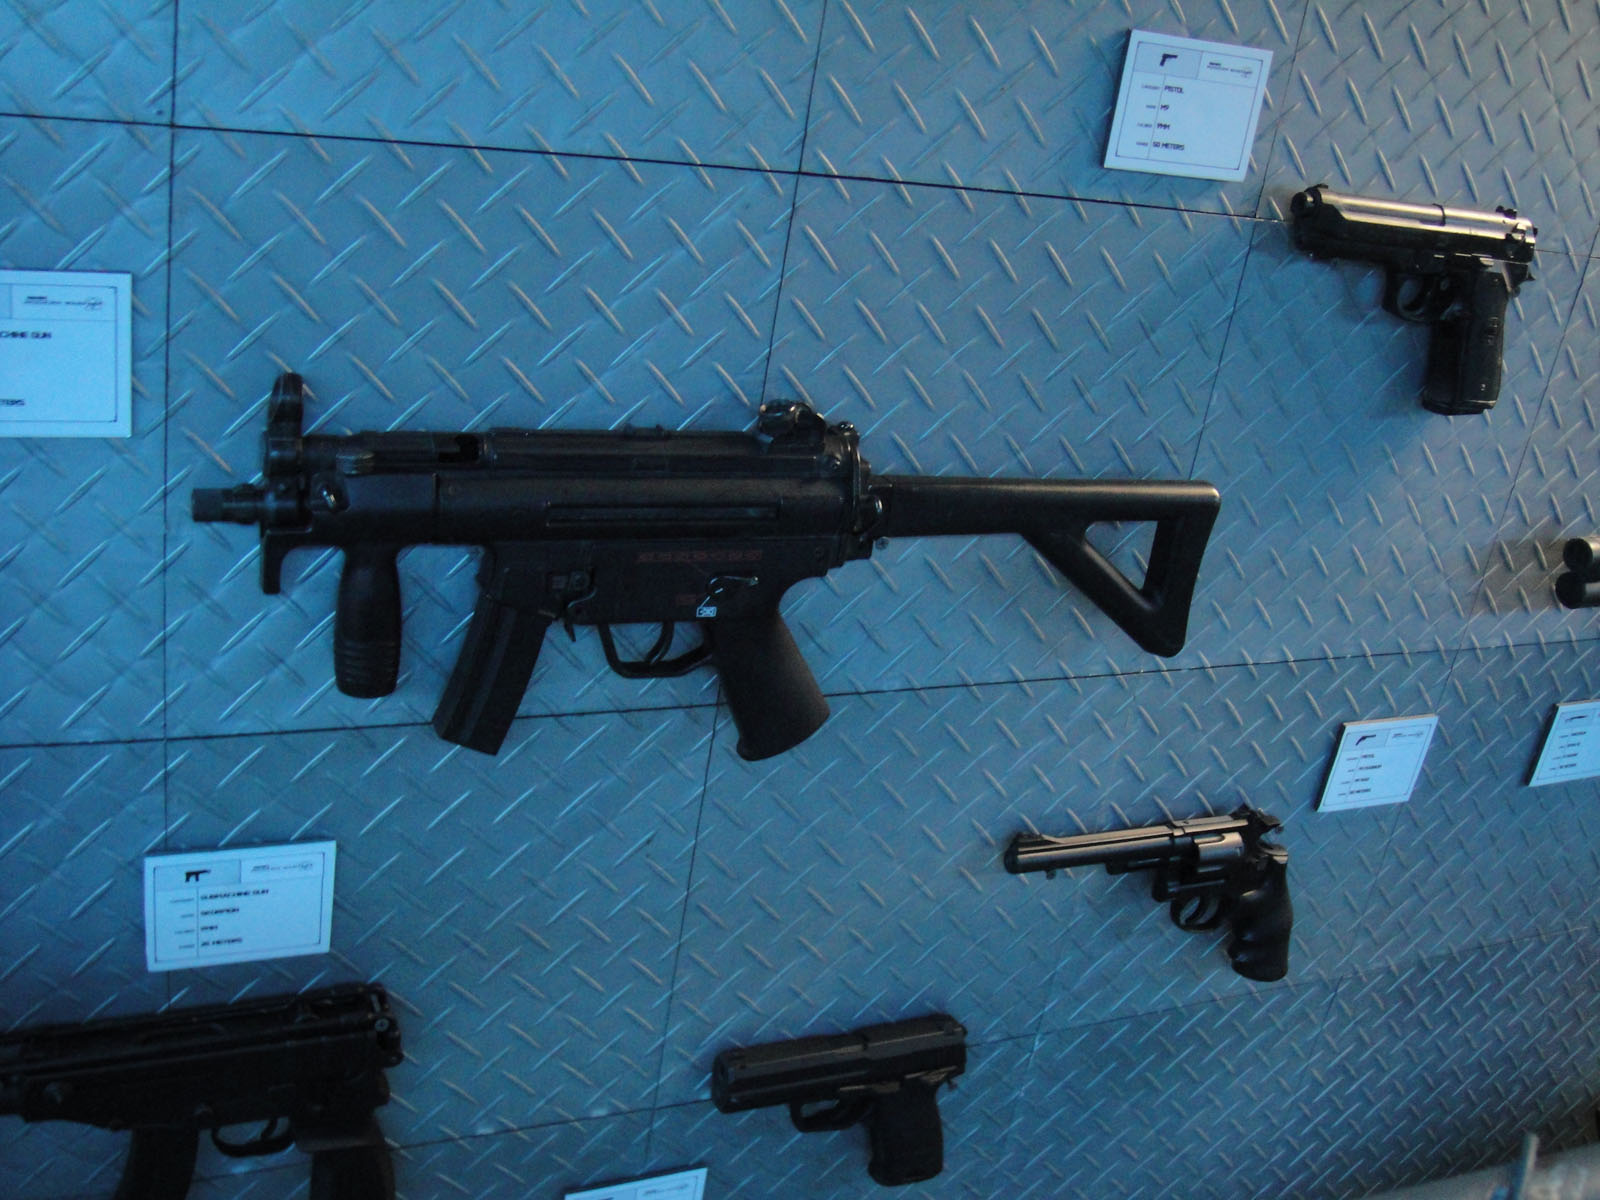 several guns are displayed on blue tile walls